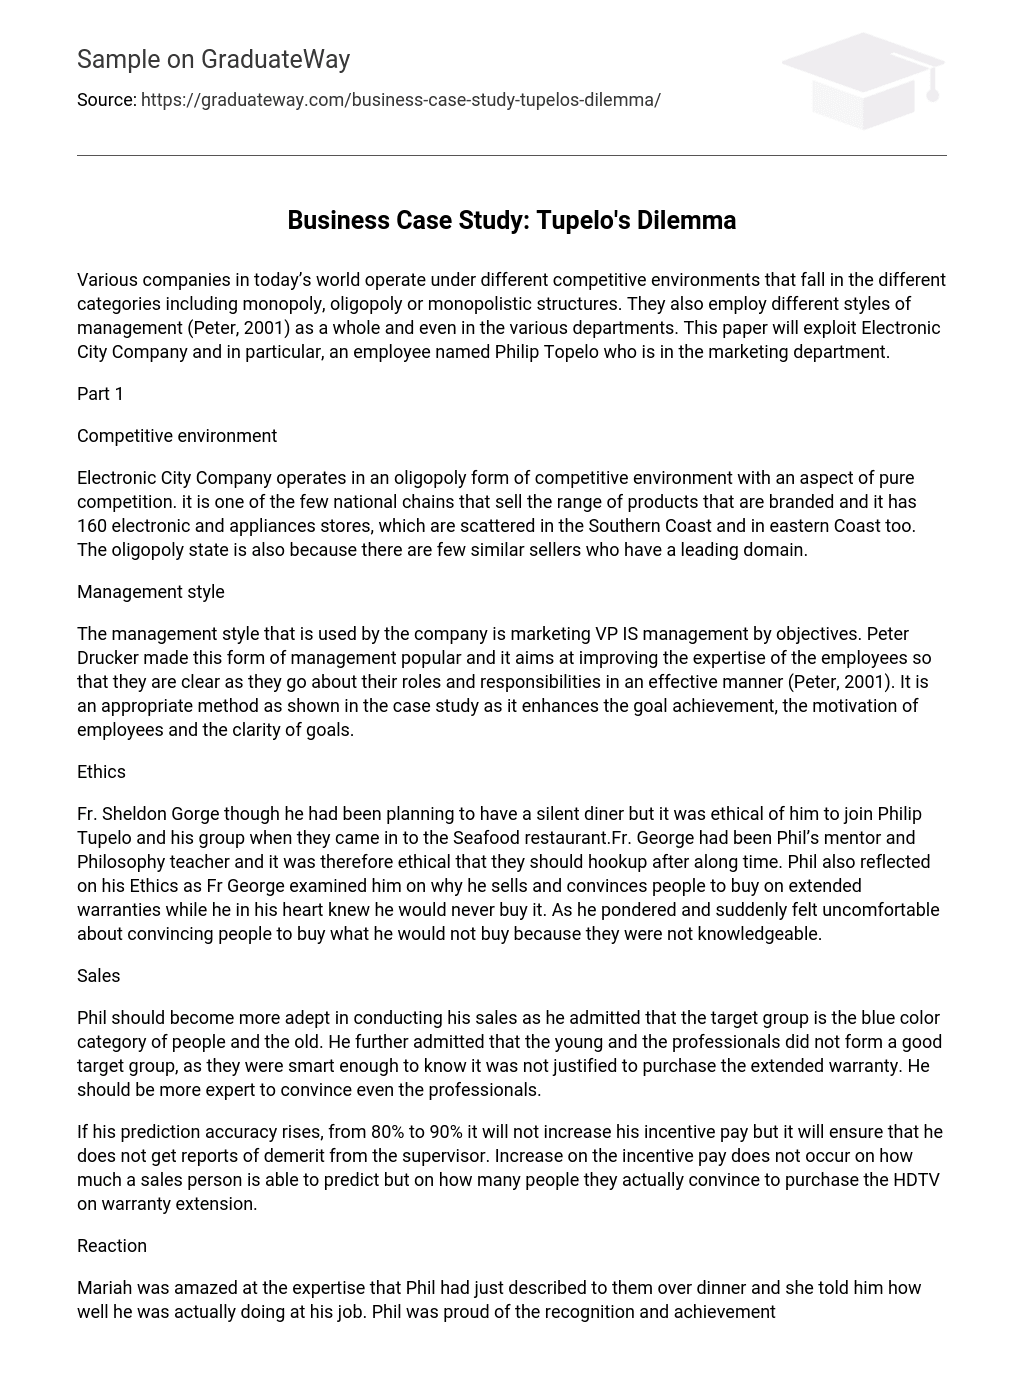 Business Case Study: Tupelo’s Dilemma